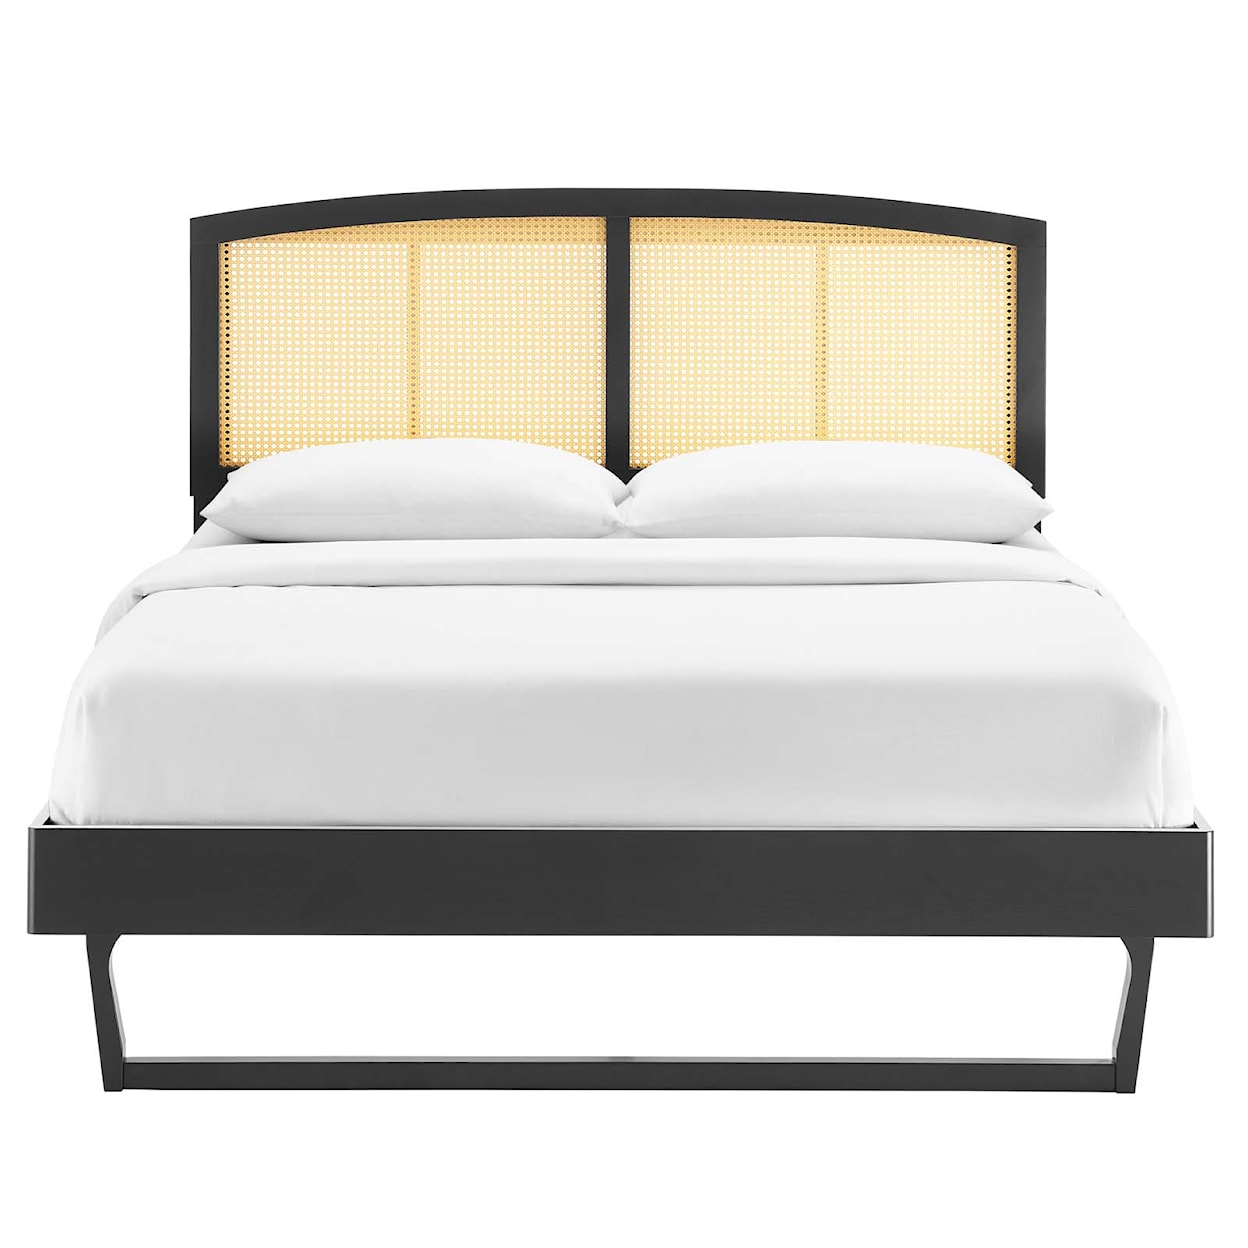 Modway Sierra Full Platform Bed